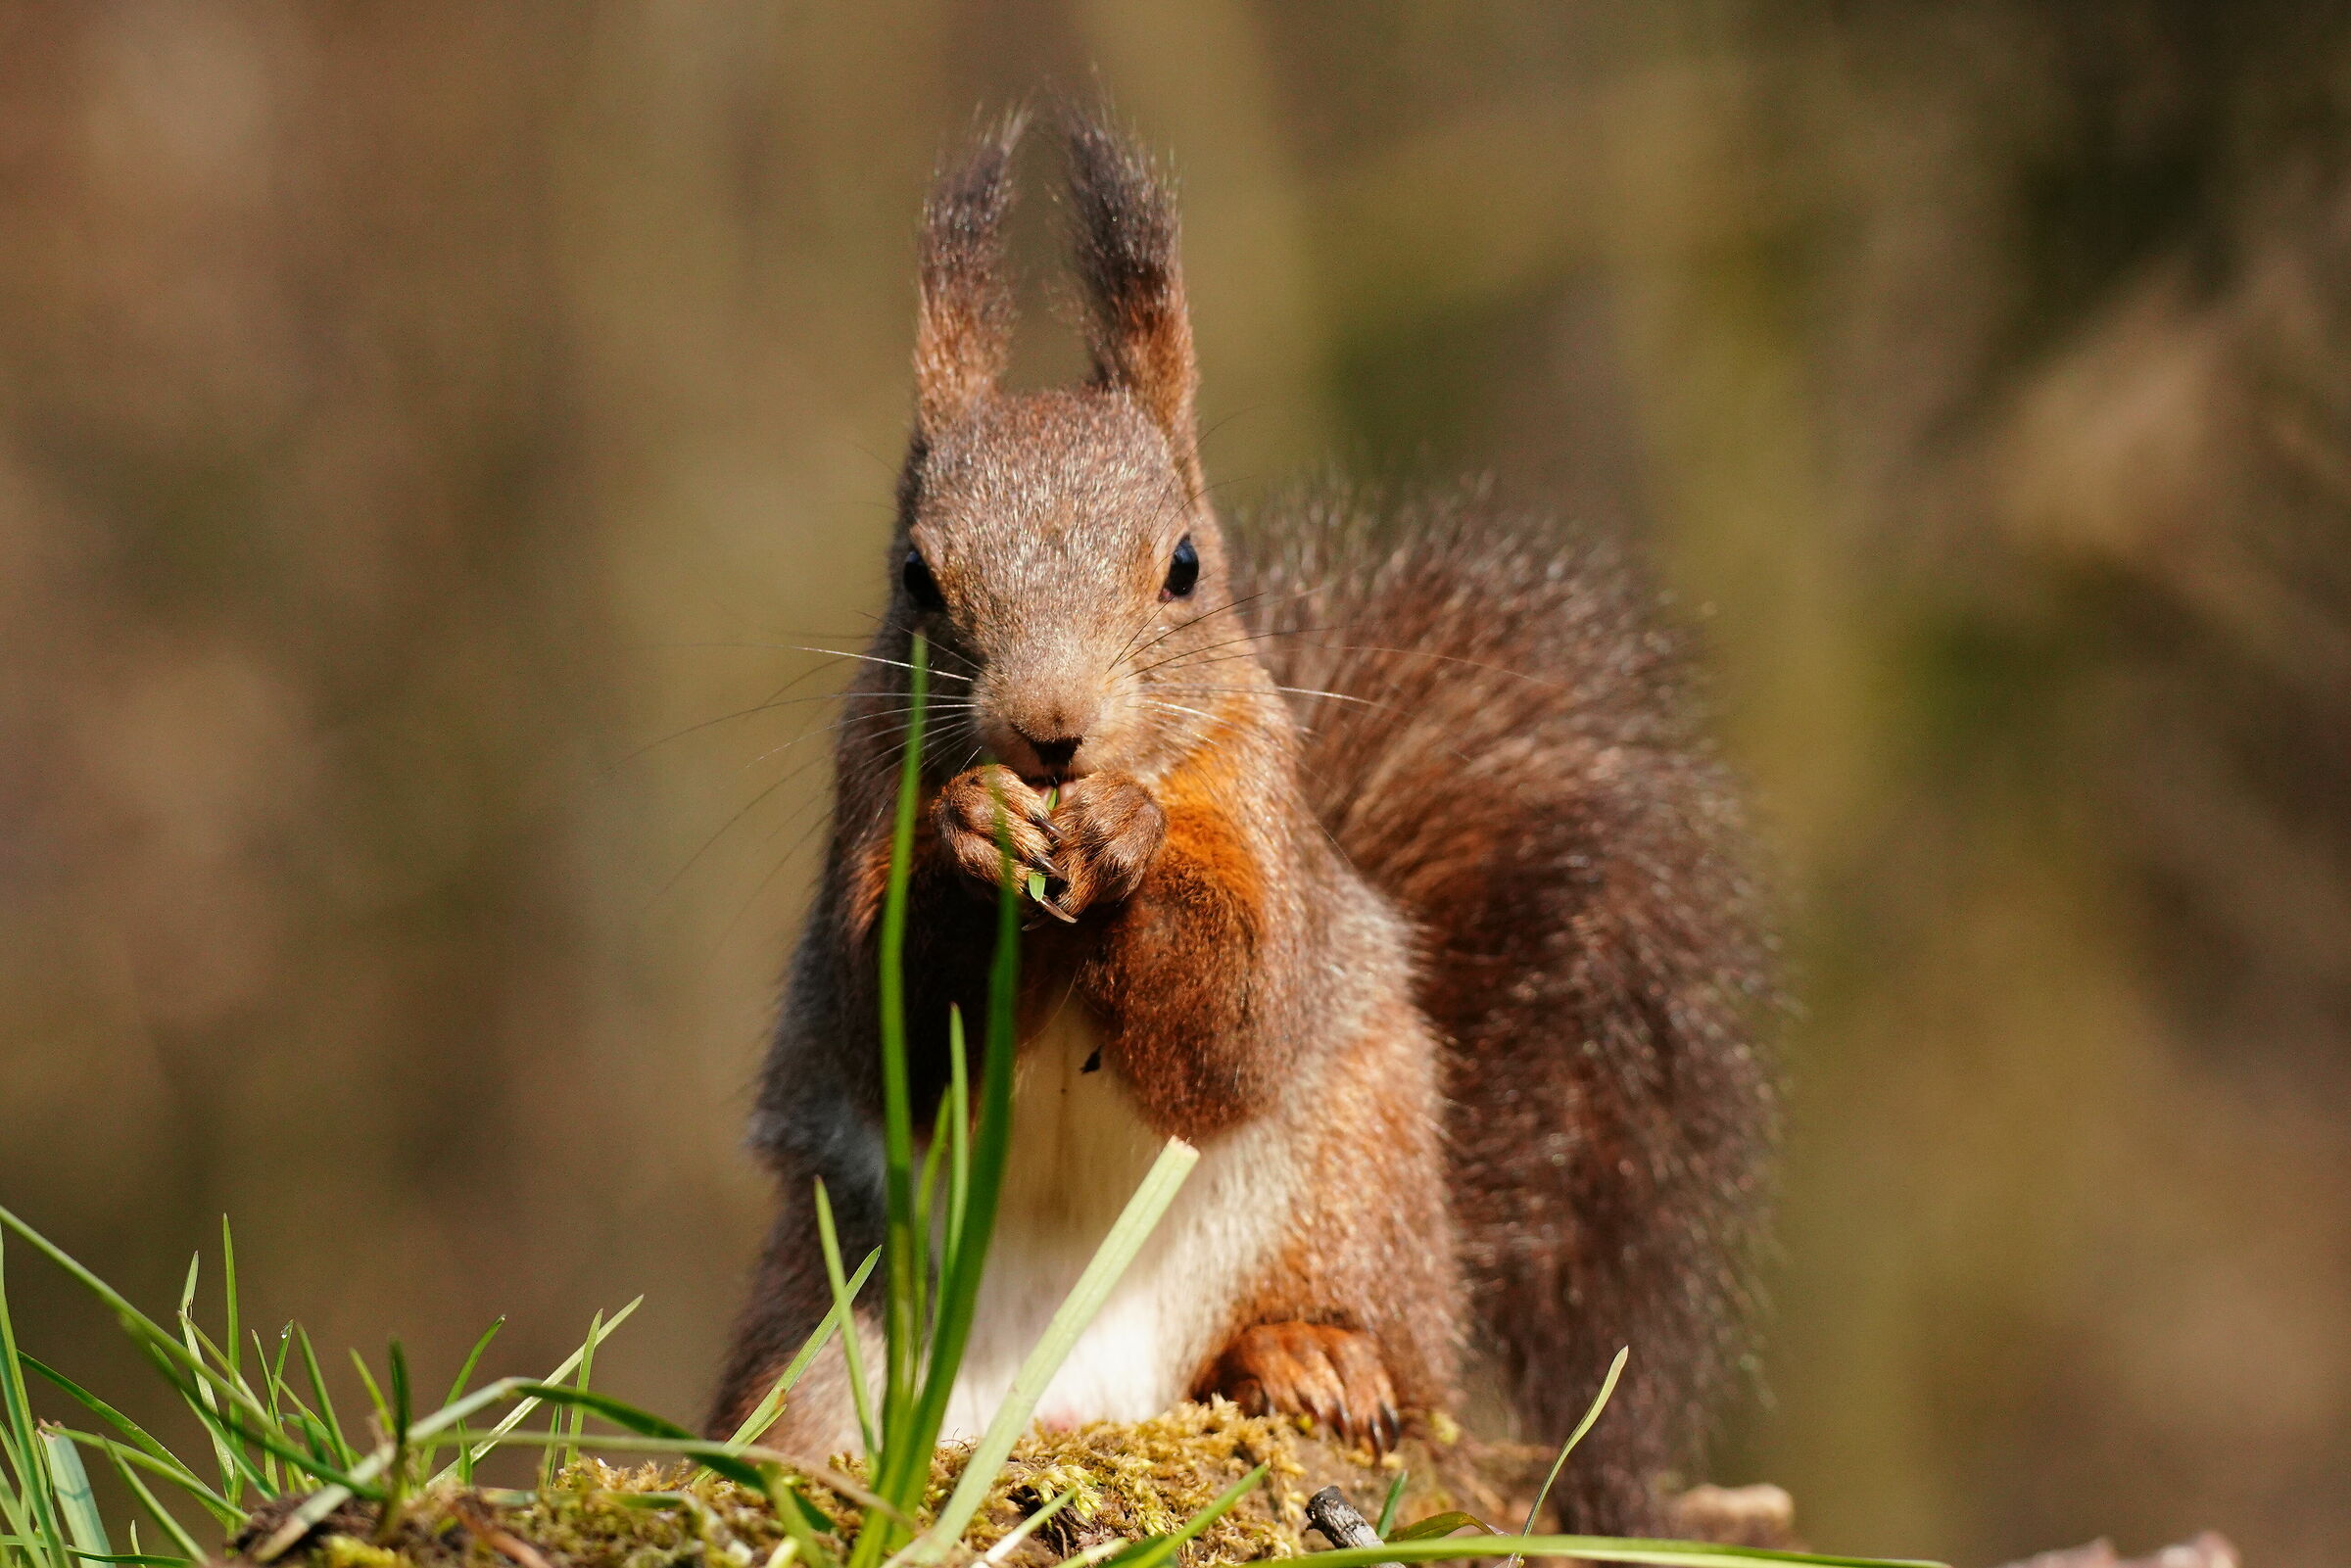 Squirrel eating grass blade......